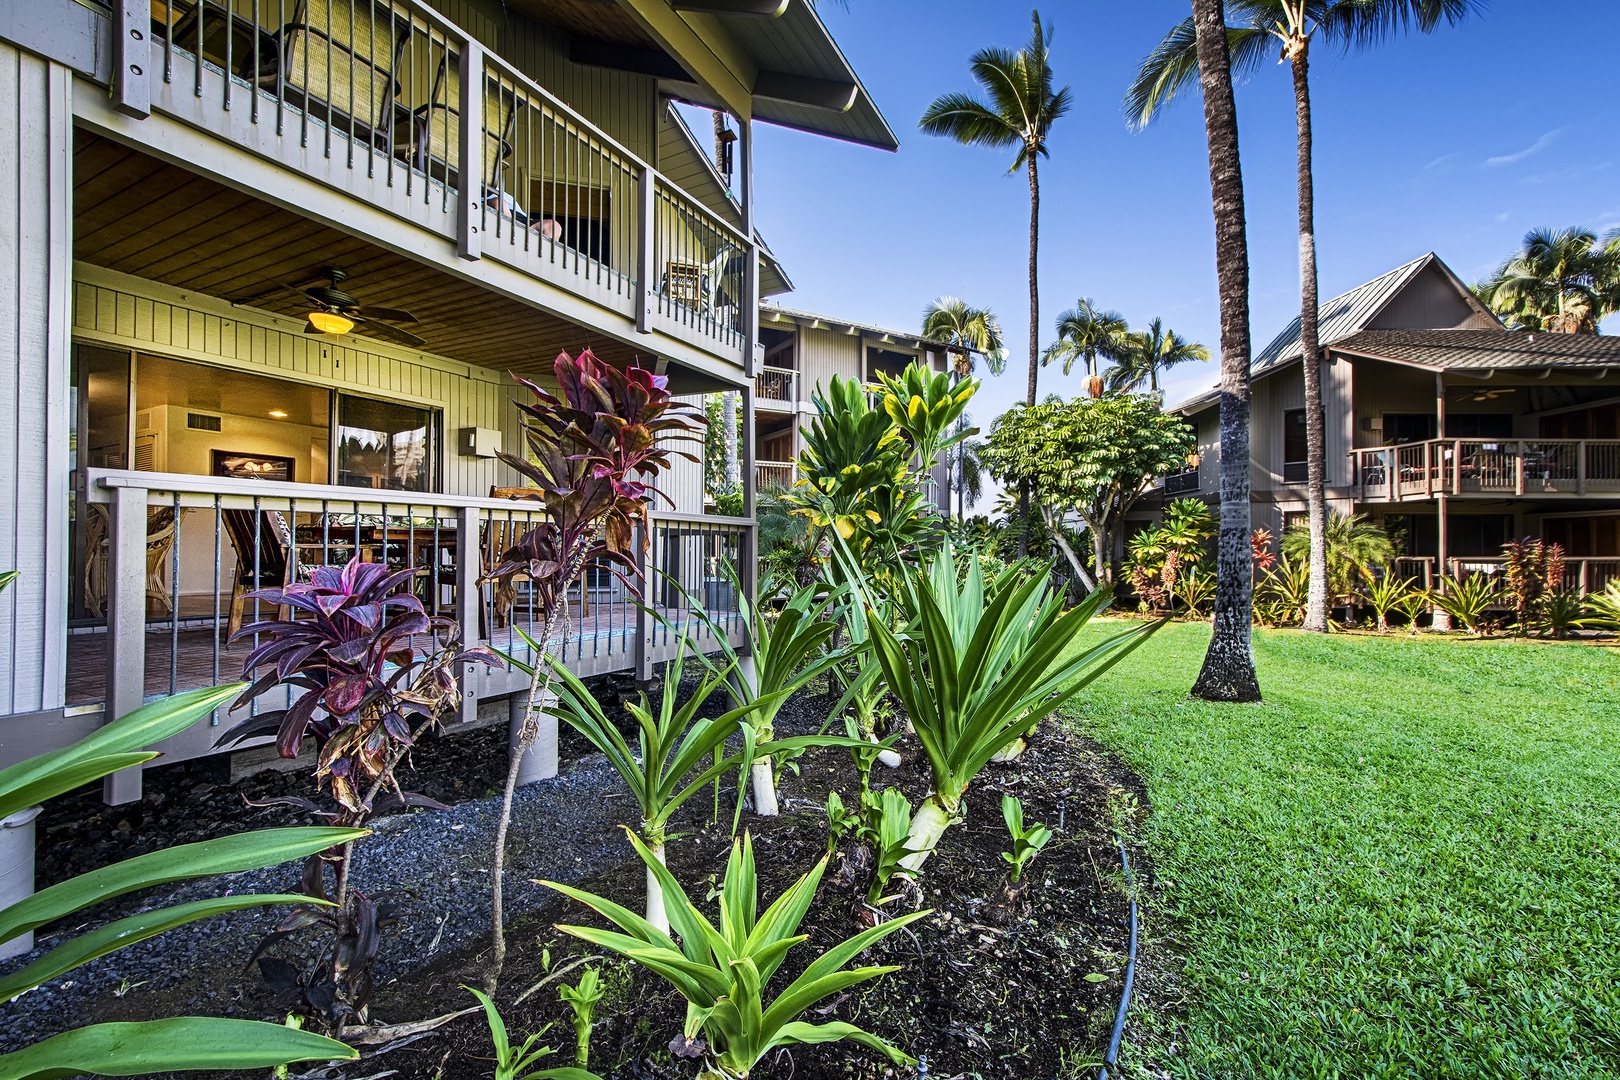 Kailua Kona Vacation Rentals, Kanaloa 701 - You'll love the extensive list of outdoor amenities at Kanaloa